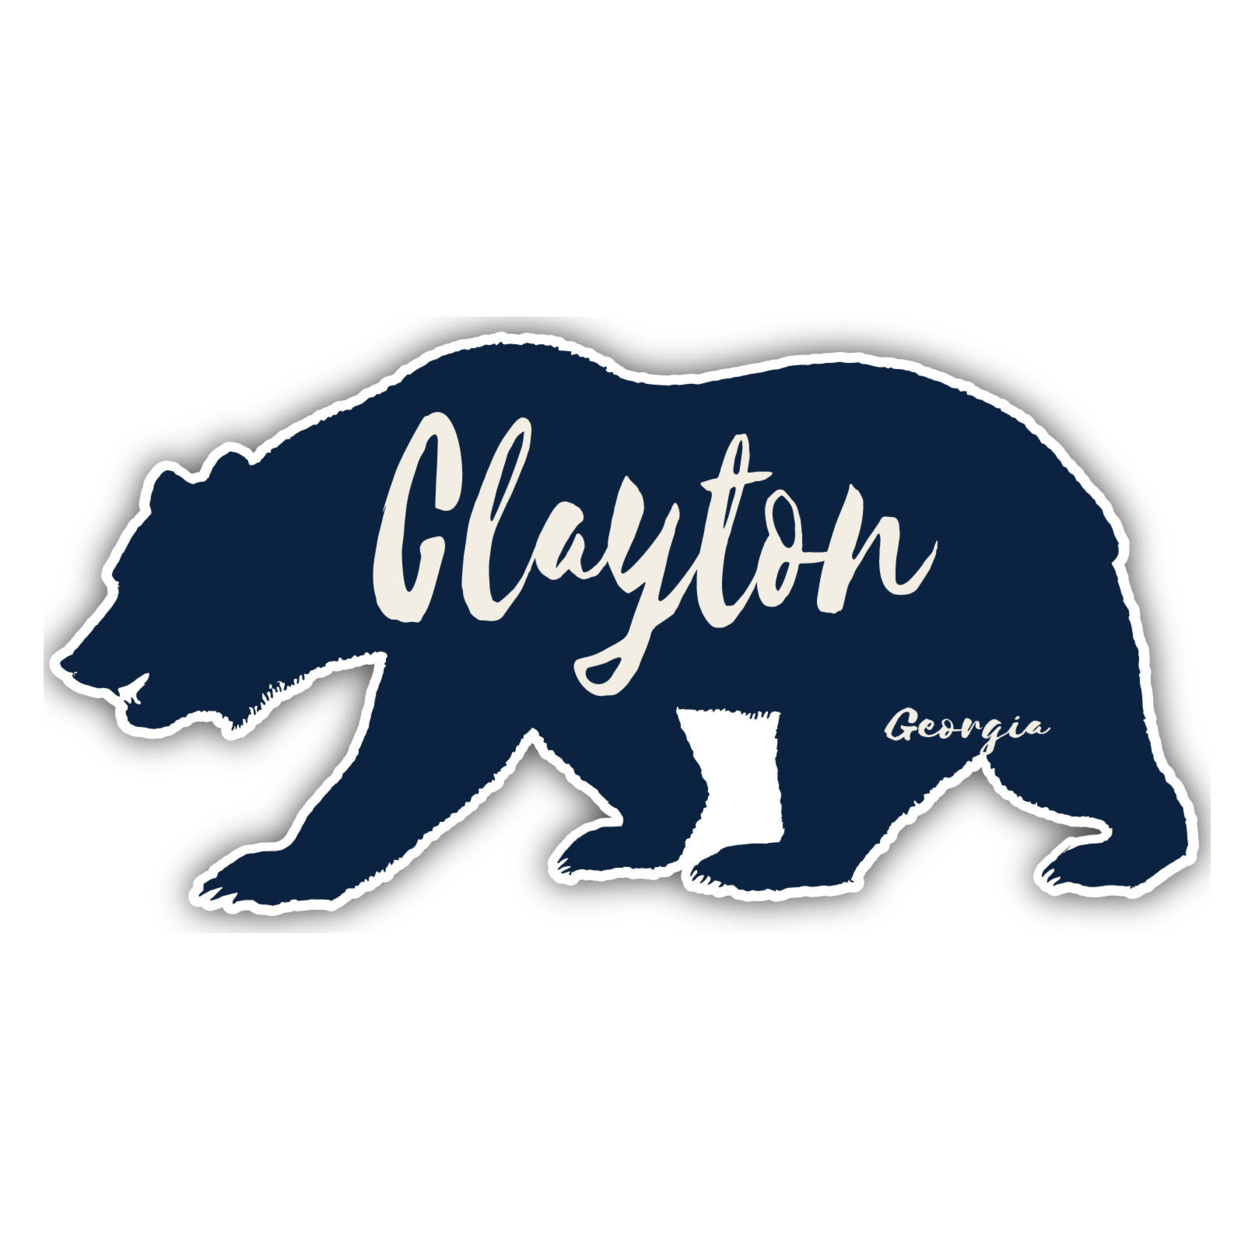 Clayton Georgia Souvenir Decorative Stickers (Choose Theme And Size) - Single Unit, 2-Inch, Bear